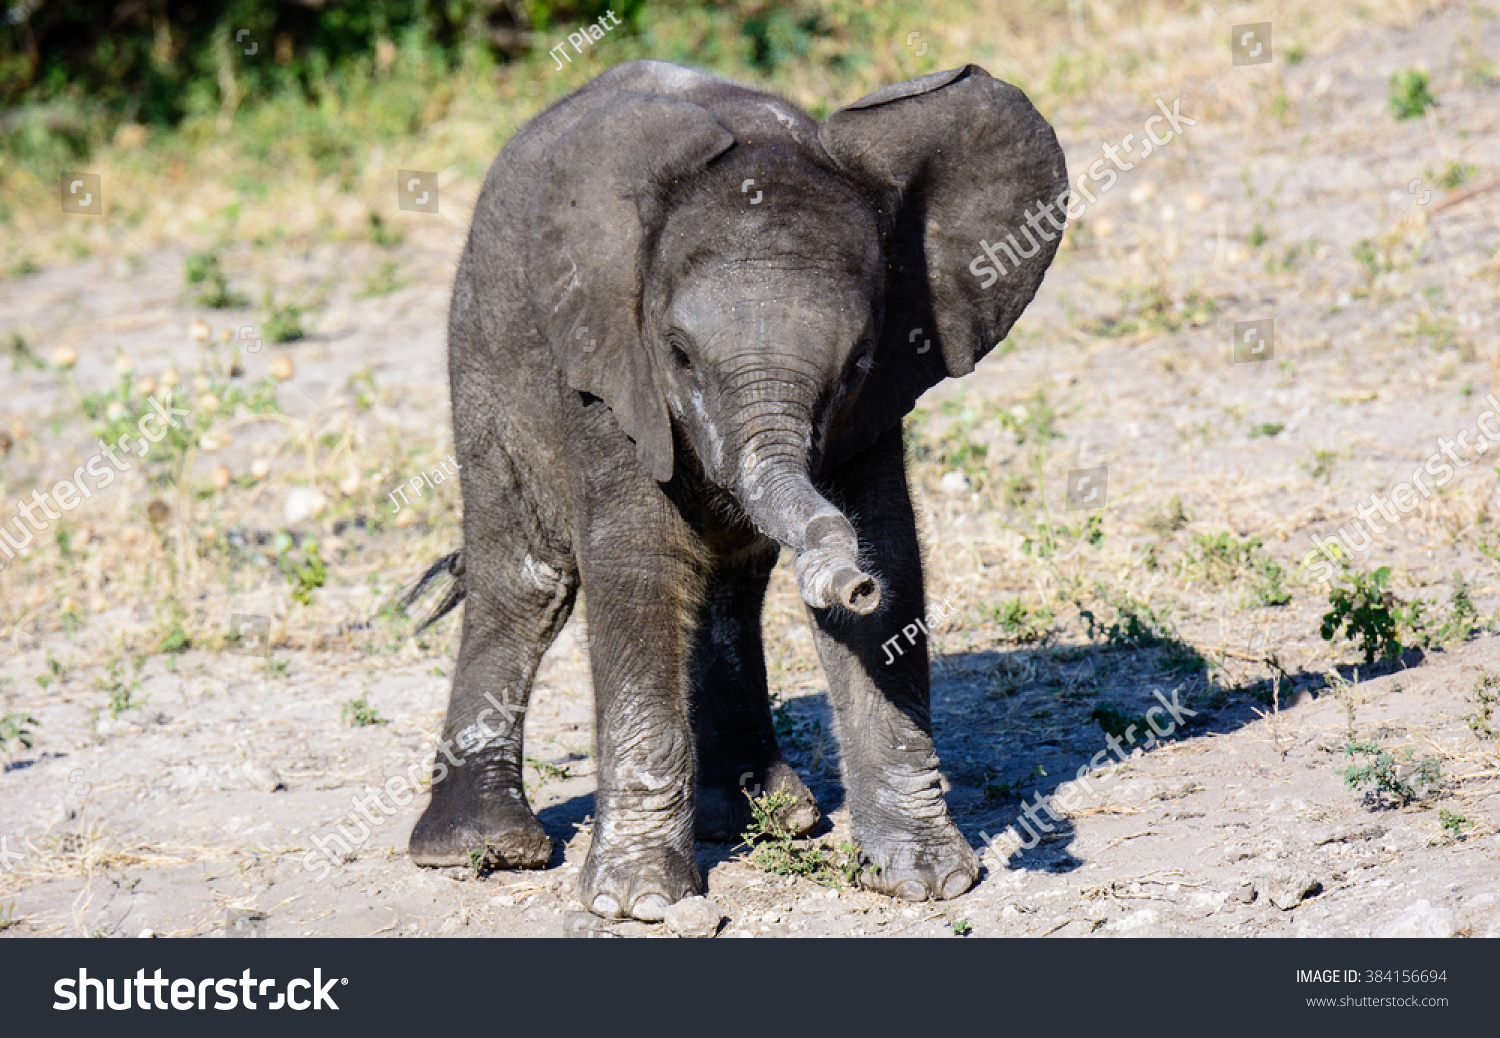 Baby Elephant Wonky Trunk Stock Photo 384156694 | Shutterstock